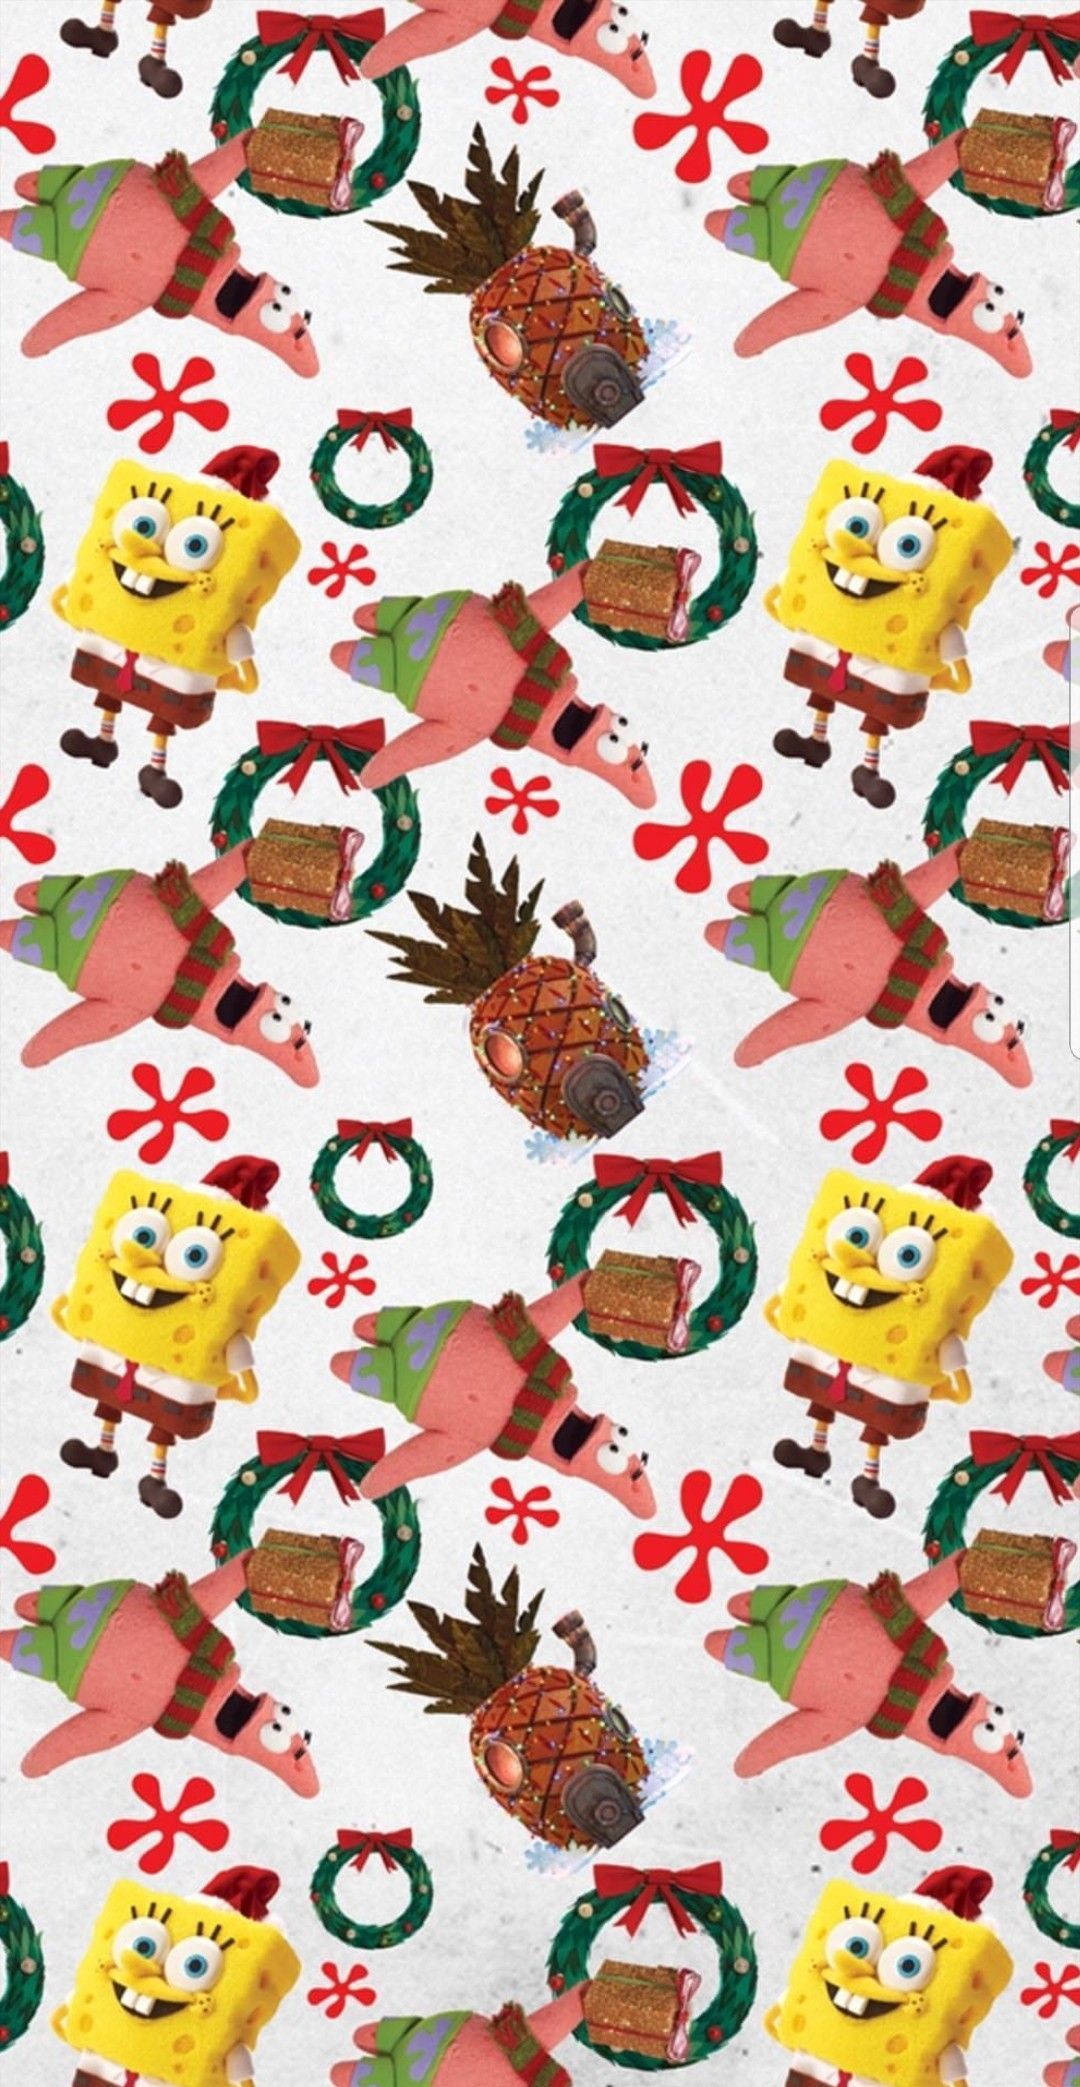 Spongebob Squarepants. Spongebob wallpaper, Spongebob christmas, Christmas wallpaper